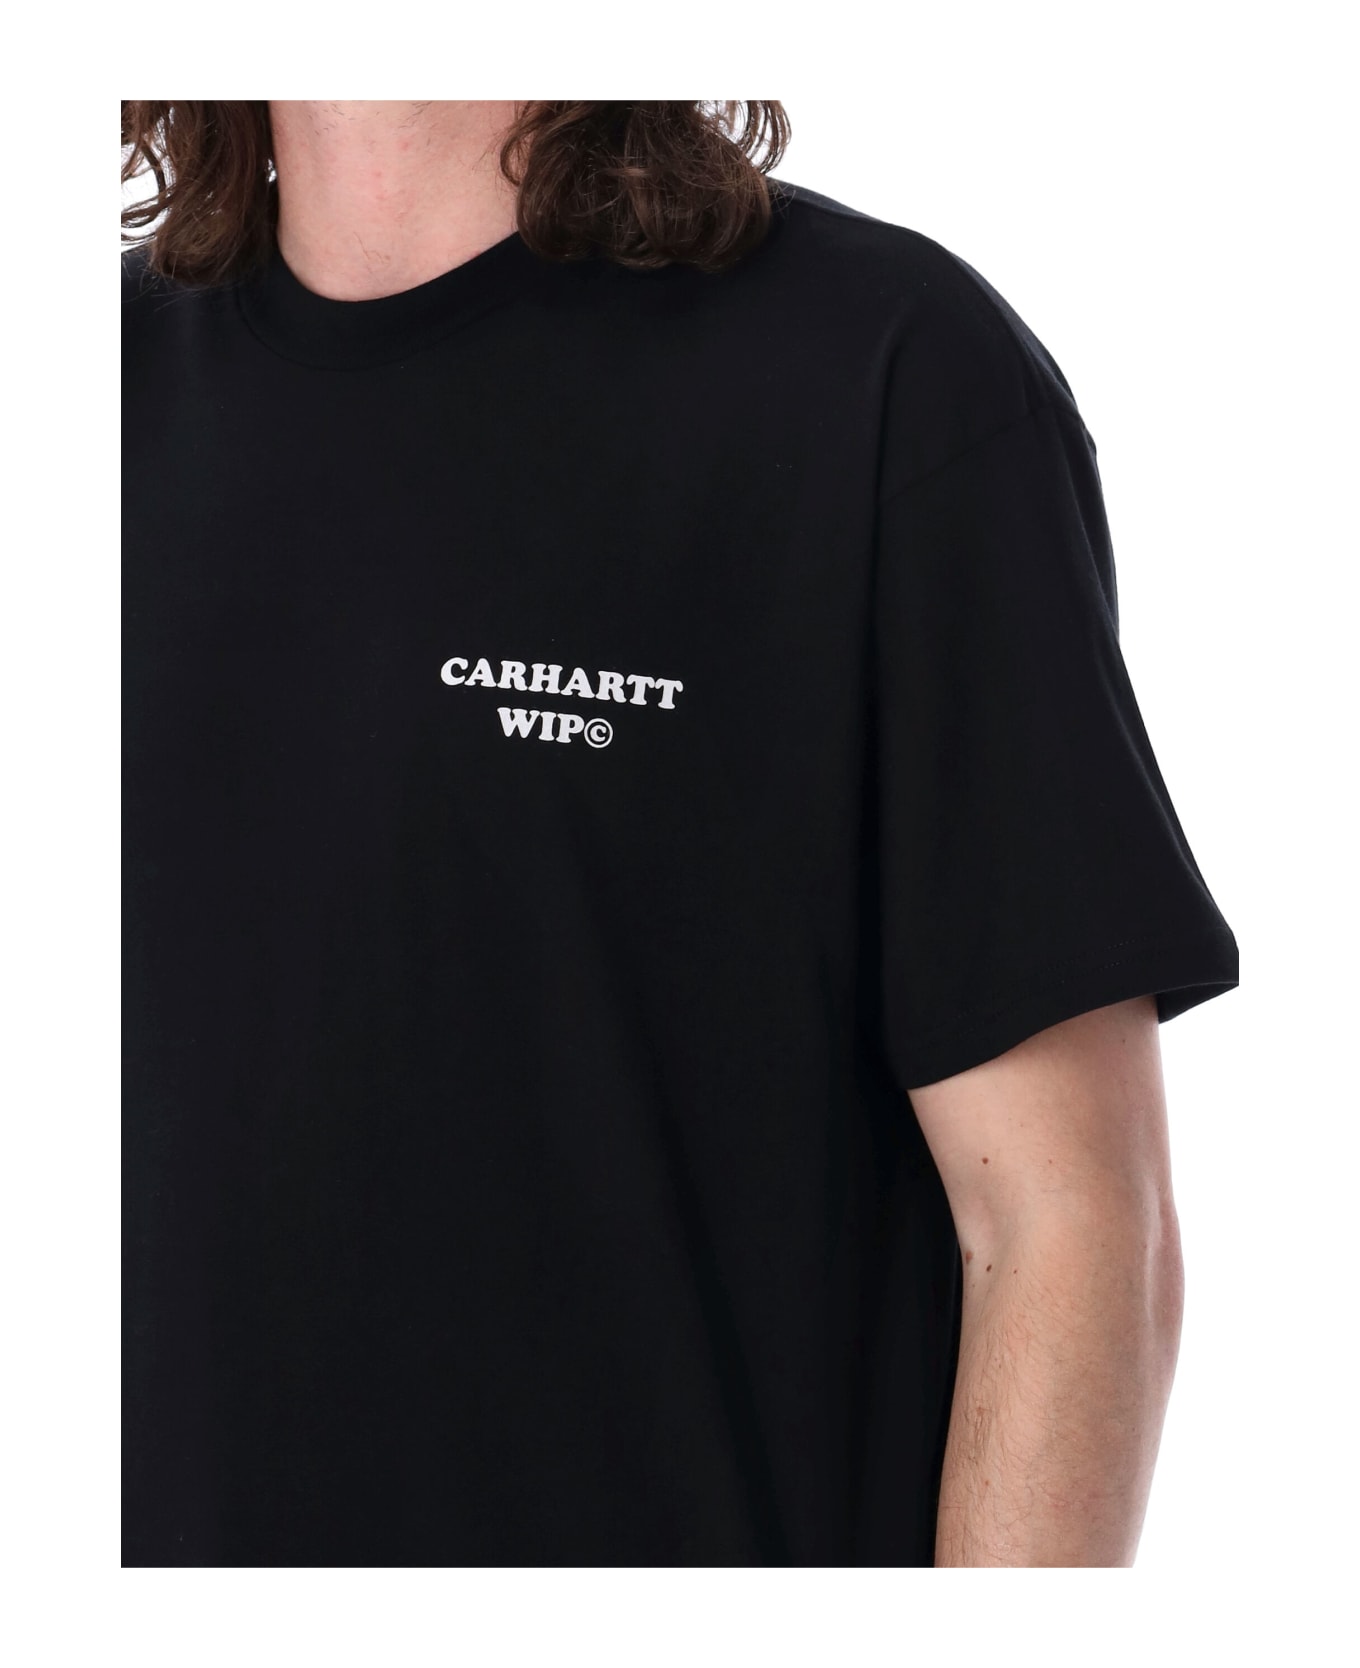 Carhartt Isis Maria Dinner T-shirt - BLACK